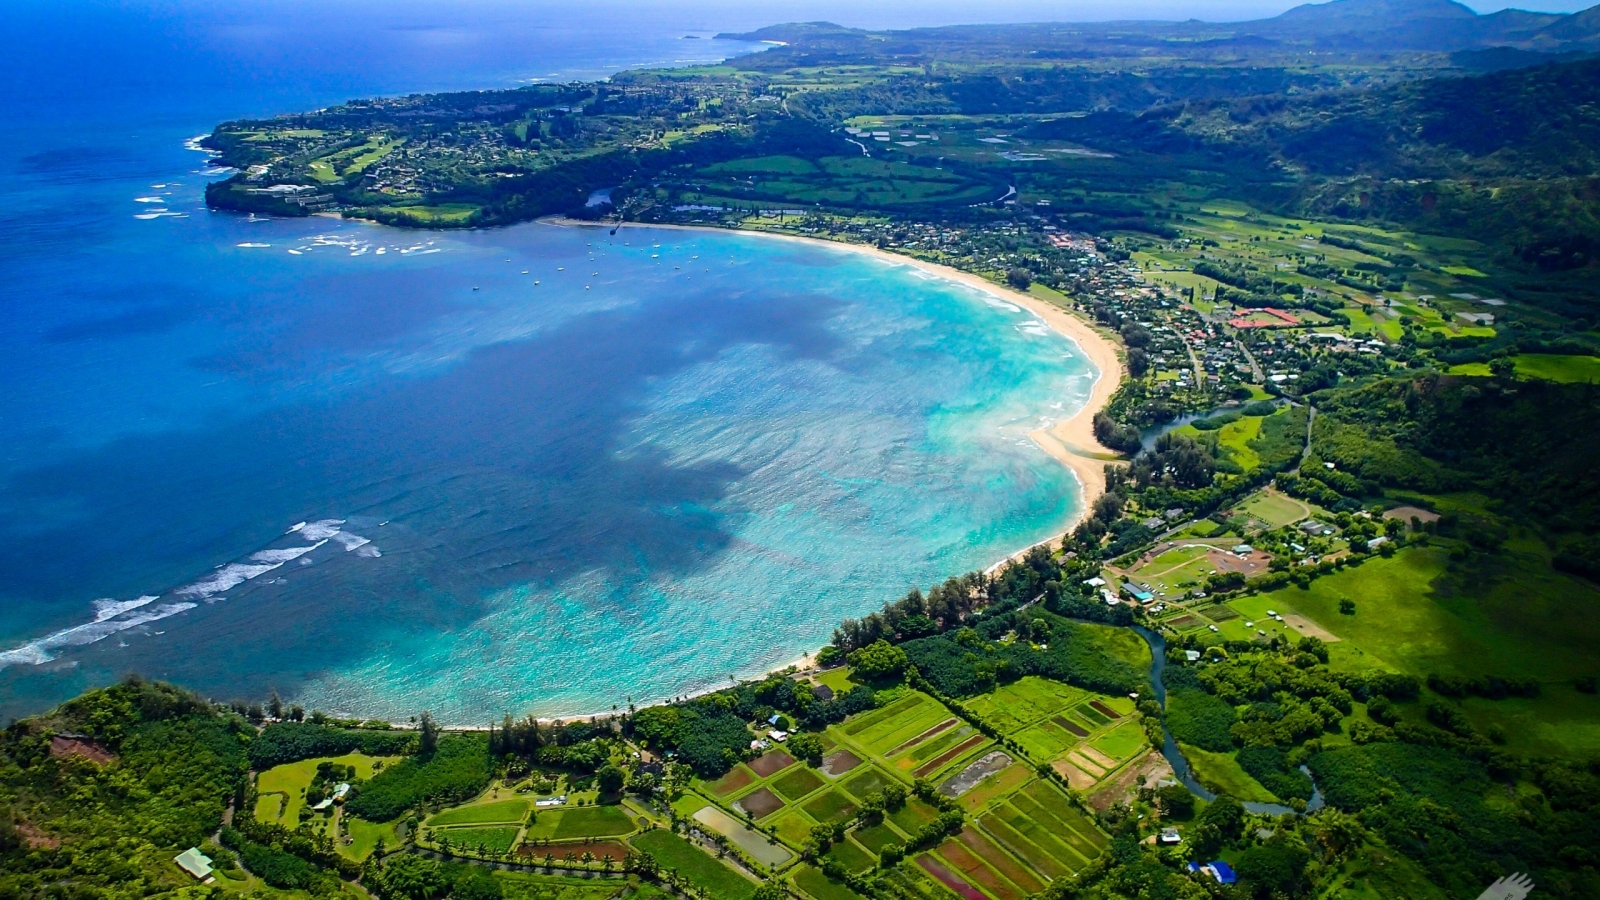 Kauai Island Hawaii for 1600 x 900 HDTV resolution